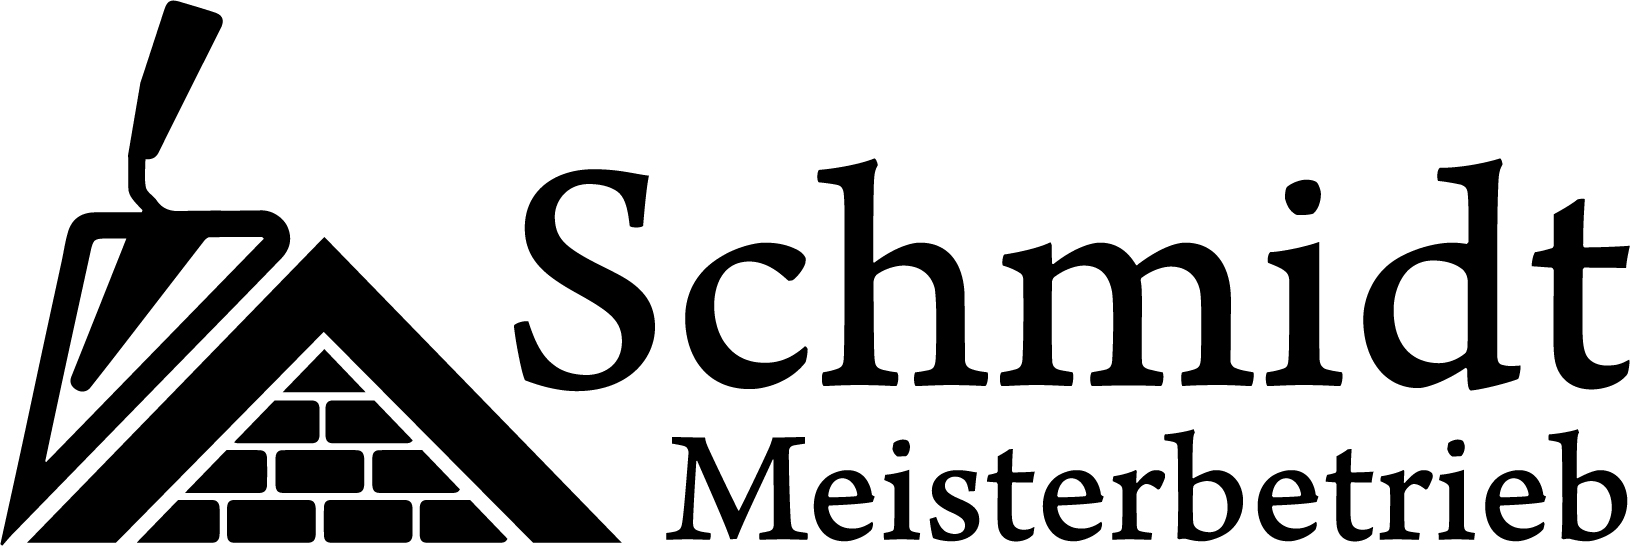 Schmidt Meisterbetrieb